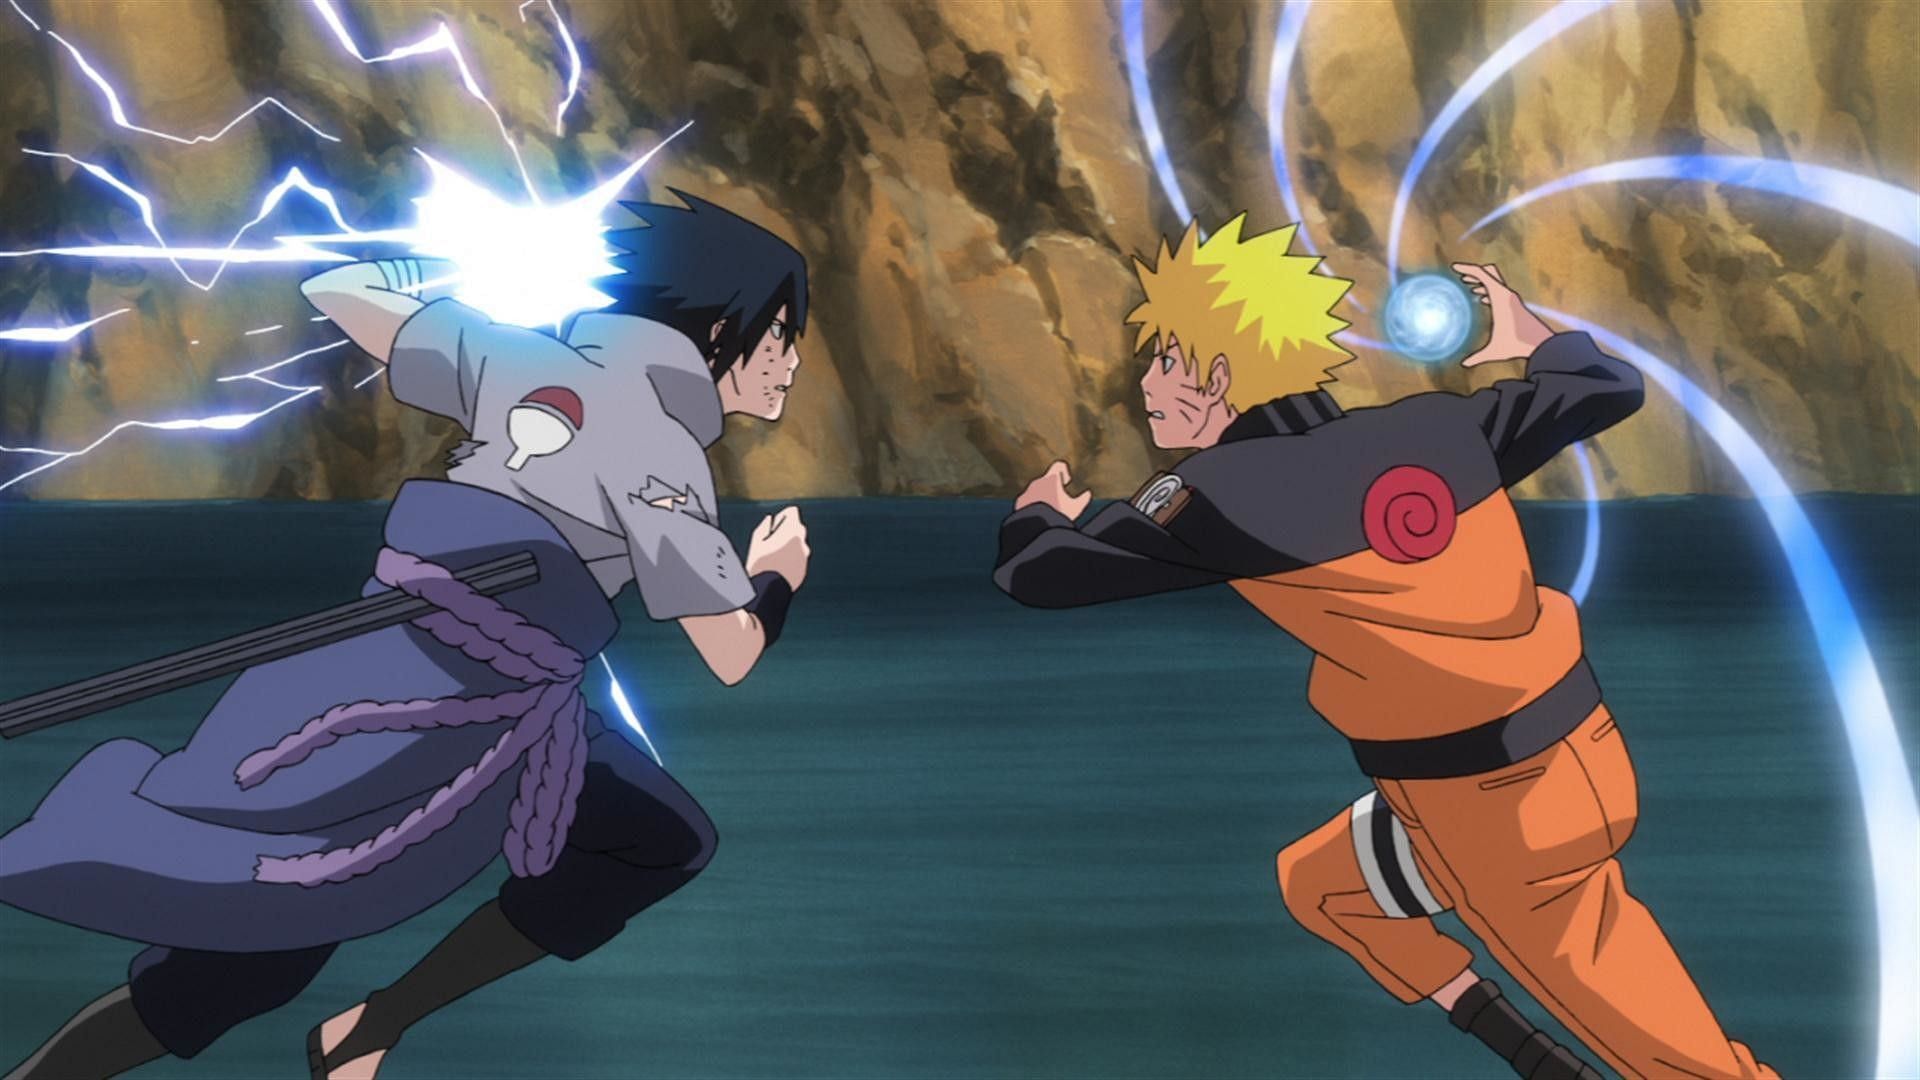 Naruto Uzumaki vs Sasuke Uchiha - Image via Studio Pierrot